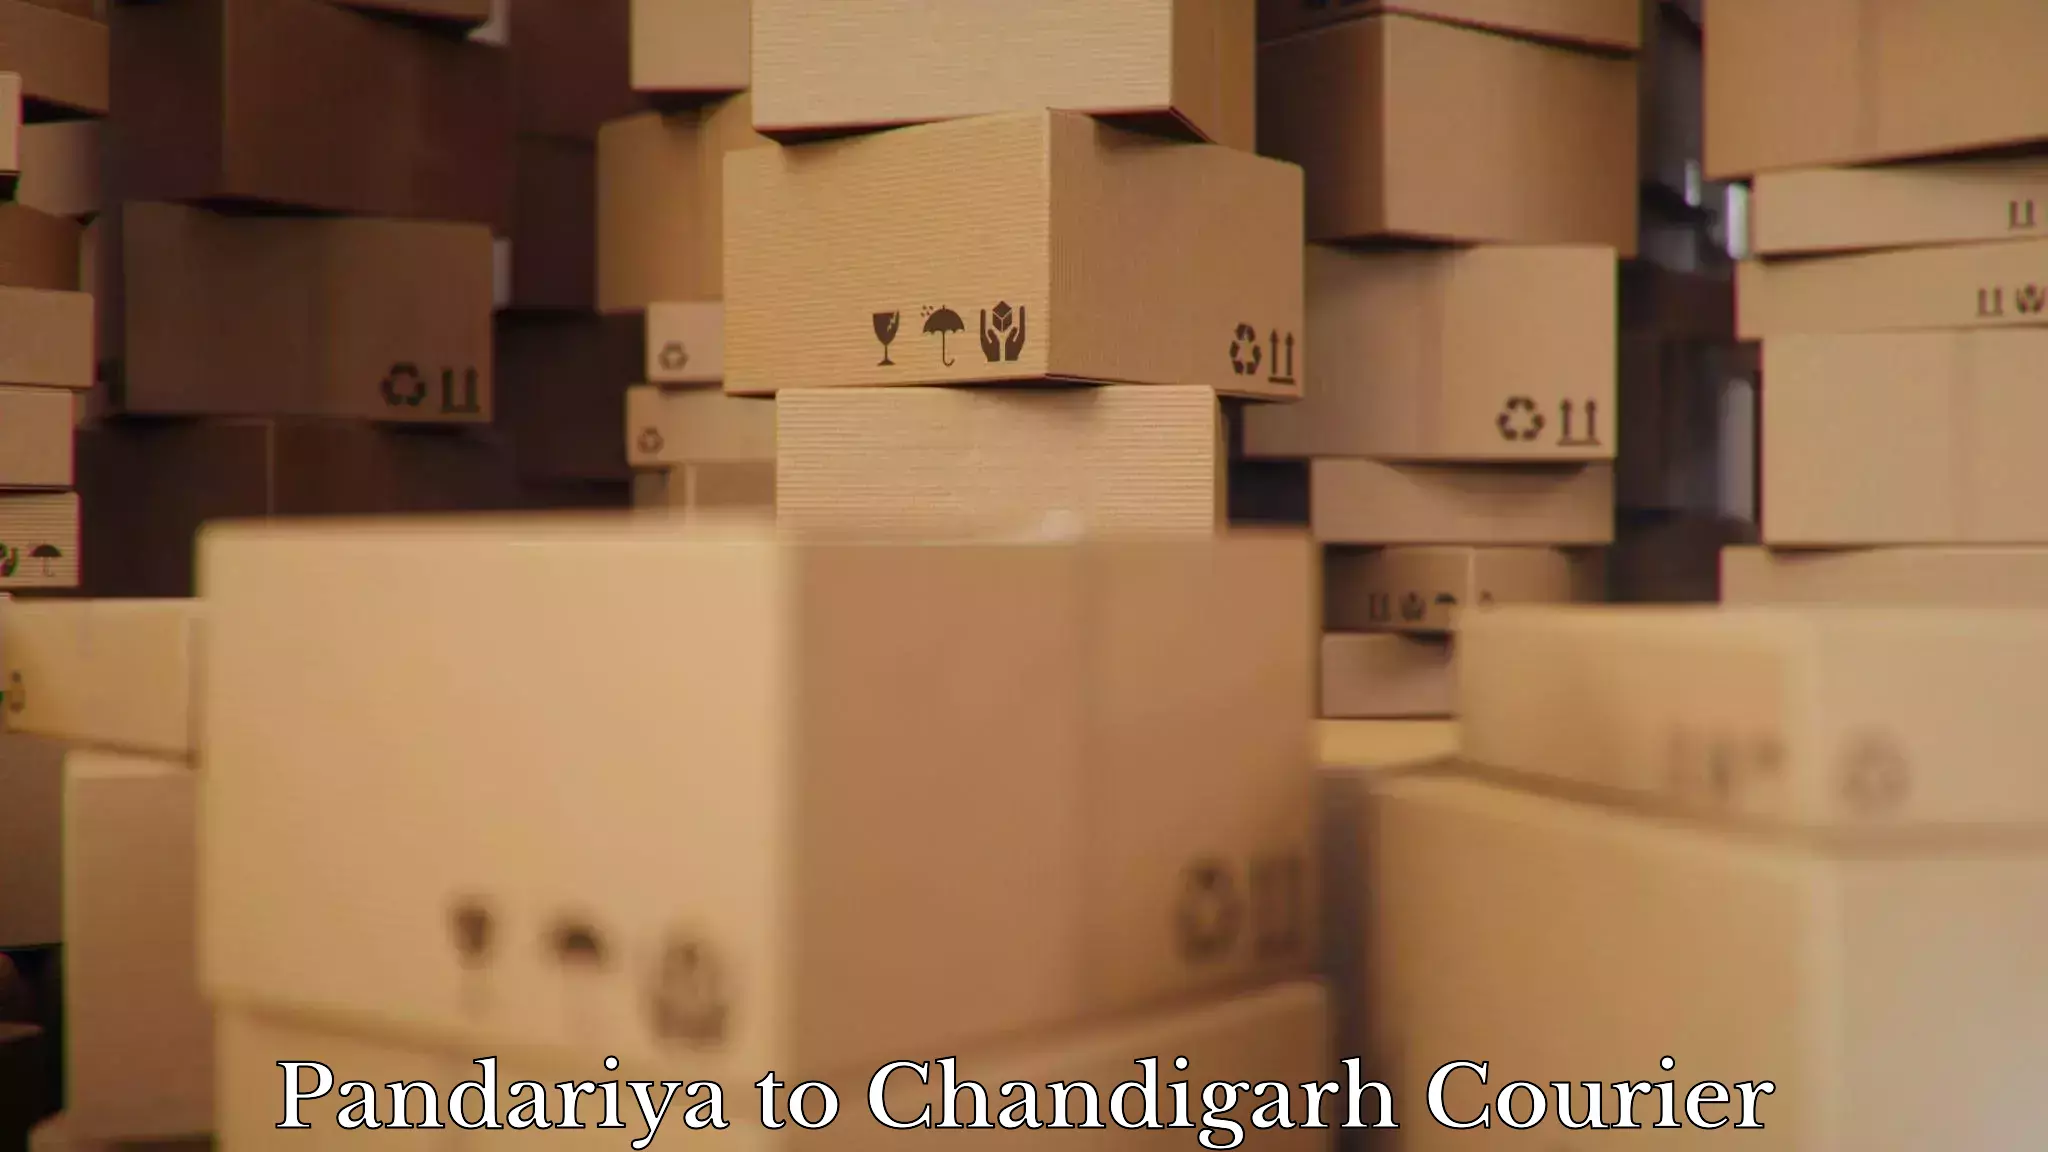 Furniture delivery service Pandariya to Chandigarh